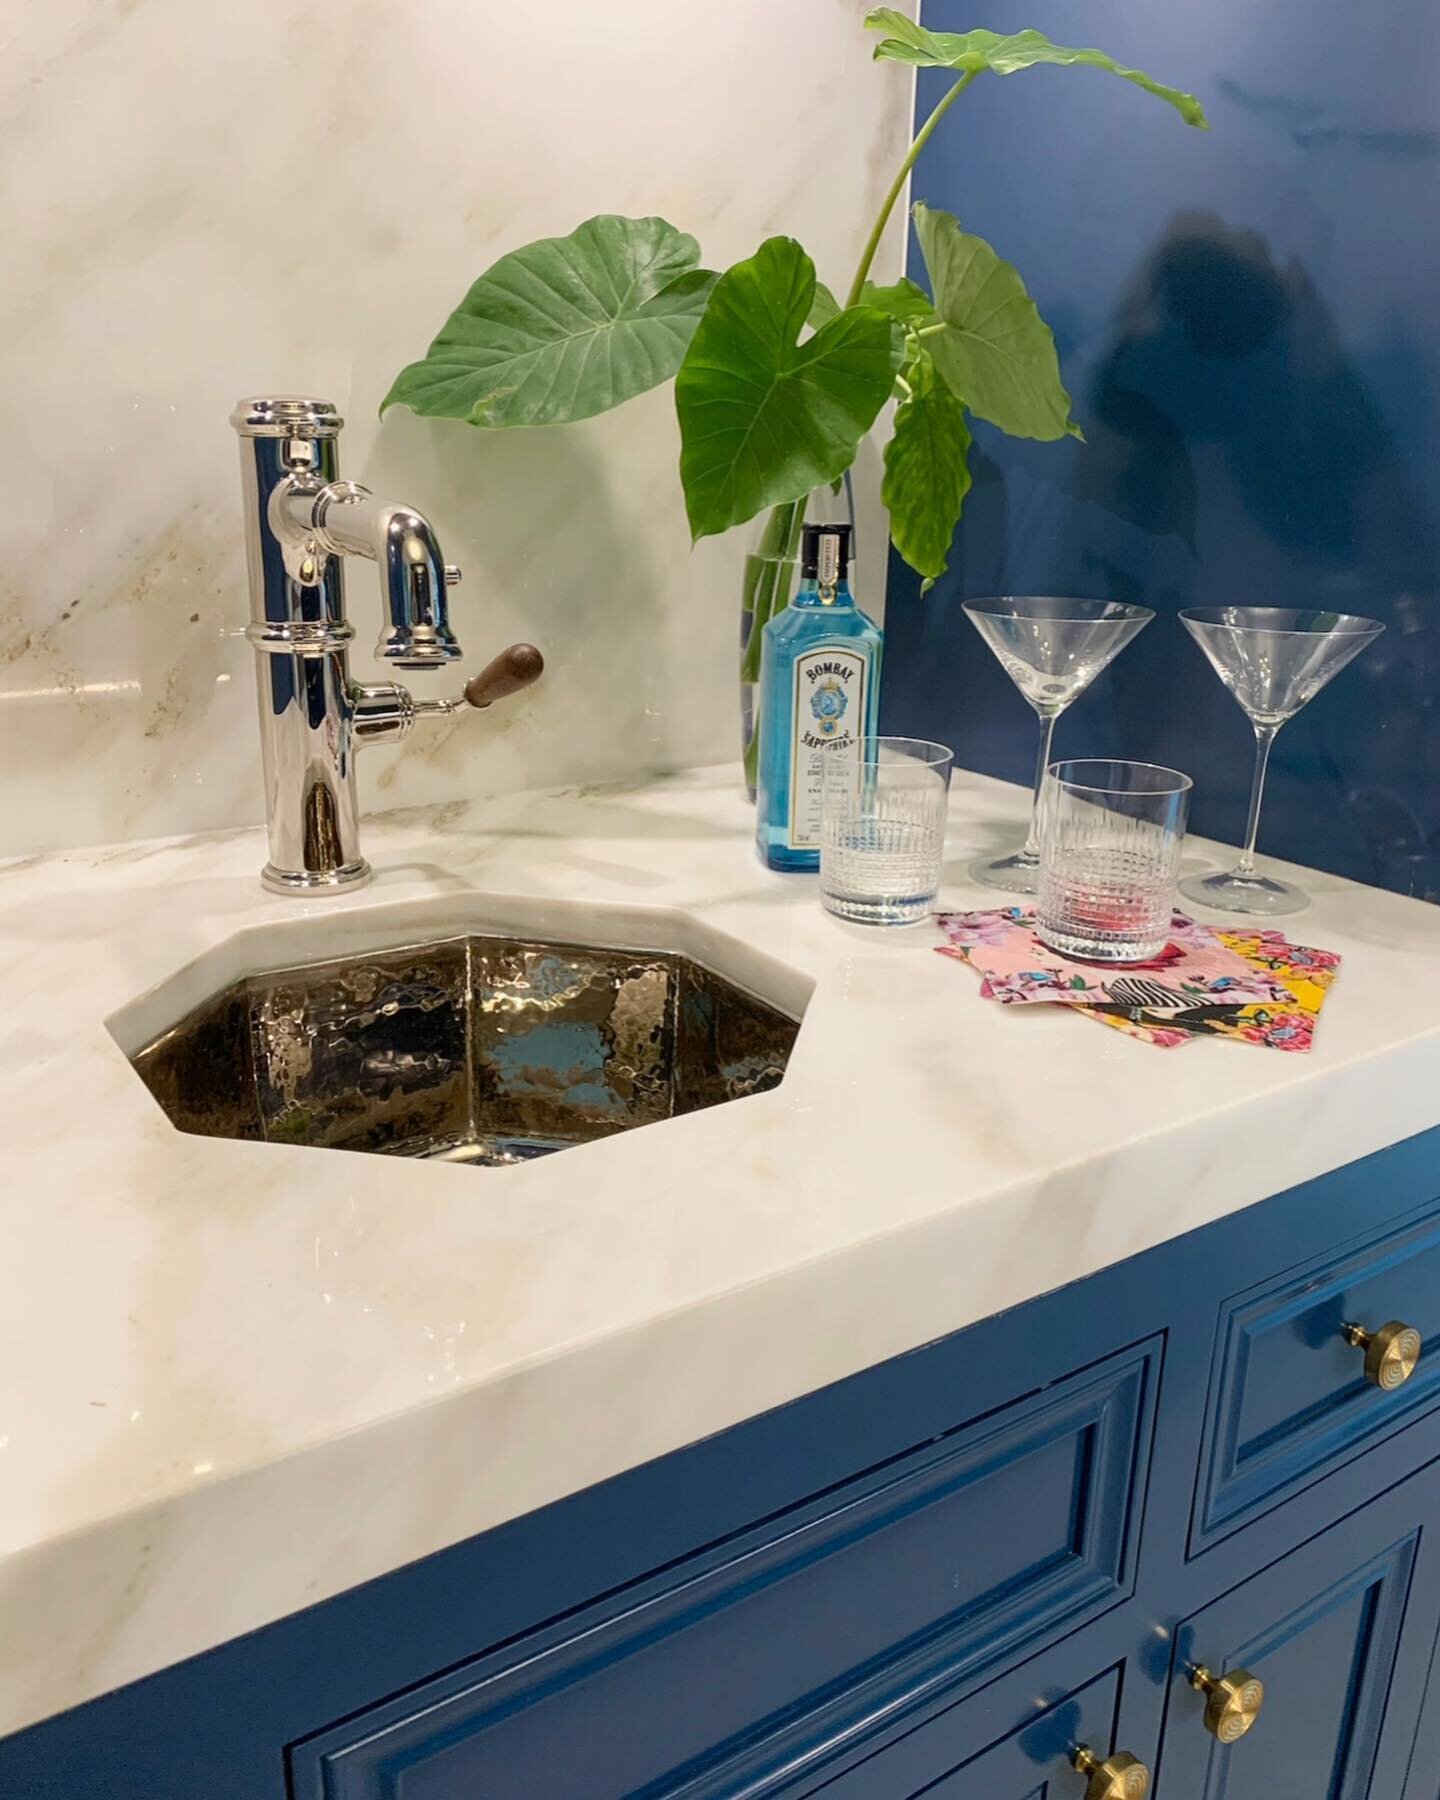 Cheers to the Canteen Faucet from @waterworks! It makes for the prettiest necessity when making weekend cocktails! #happyhour #friday 

_____________________ 

#alisonbakerinteriordesign #abid #atlantainteriordesign #interiordesign #homedesign #inter